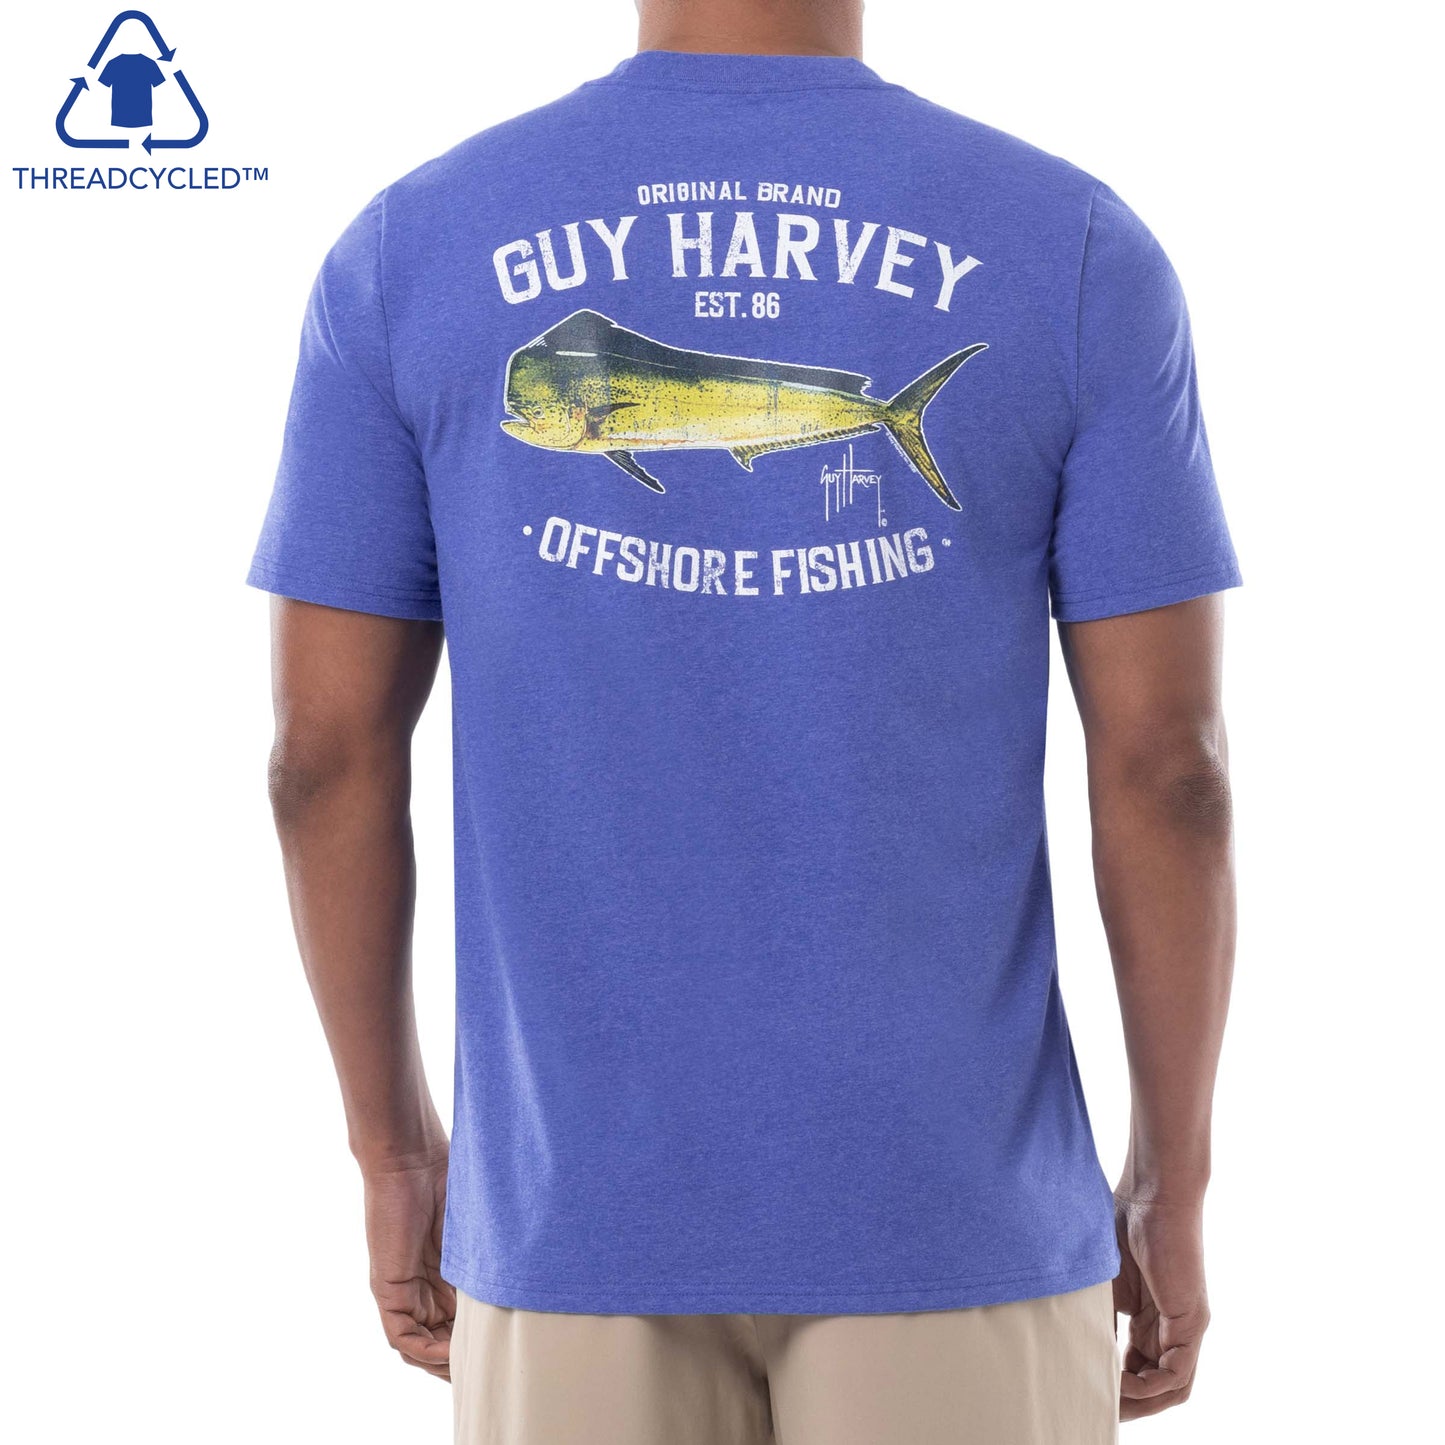 Men's Offshore Fishing Threadcycled Short Sleeve T-Shirt